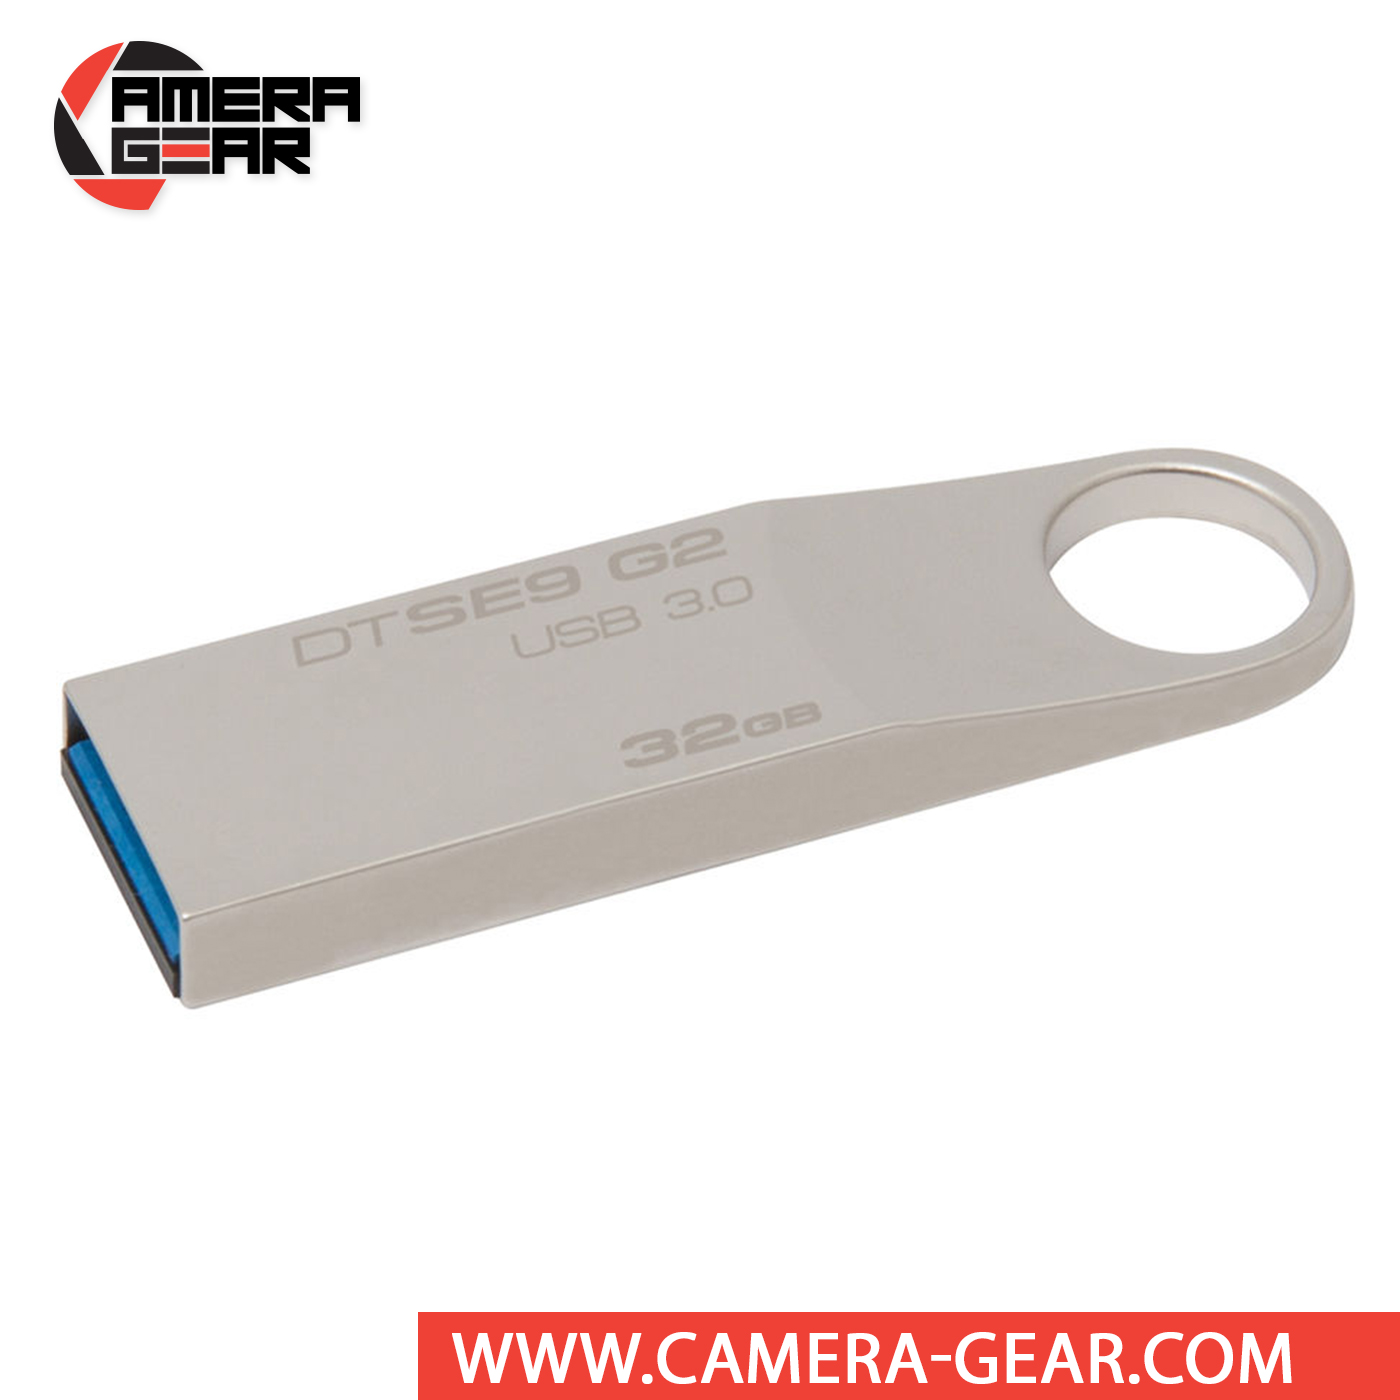 Kingston DataTraveler SE9 USB 3.0 Flash Drive - Camera Gear